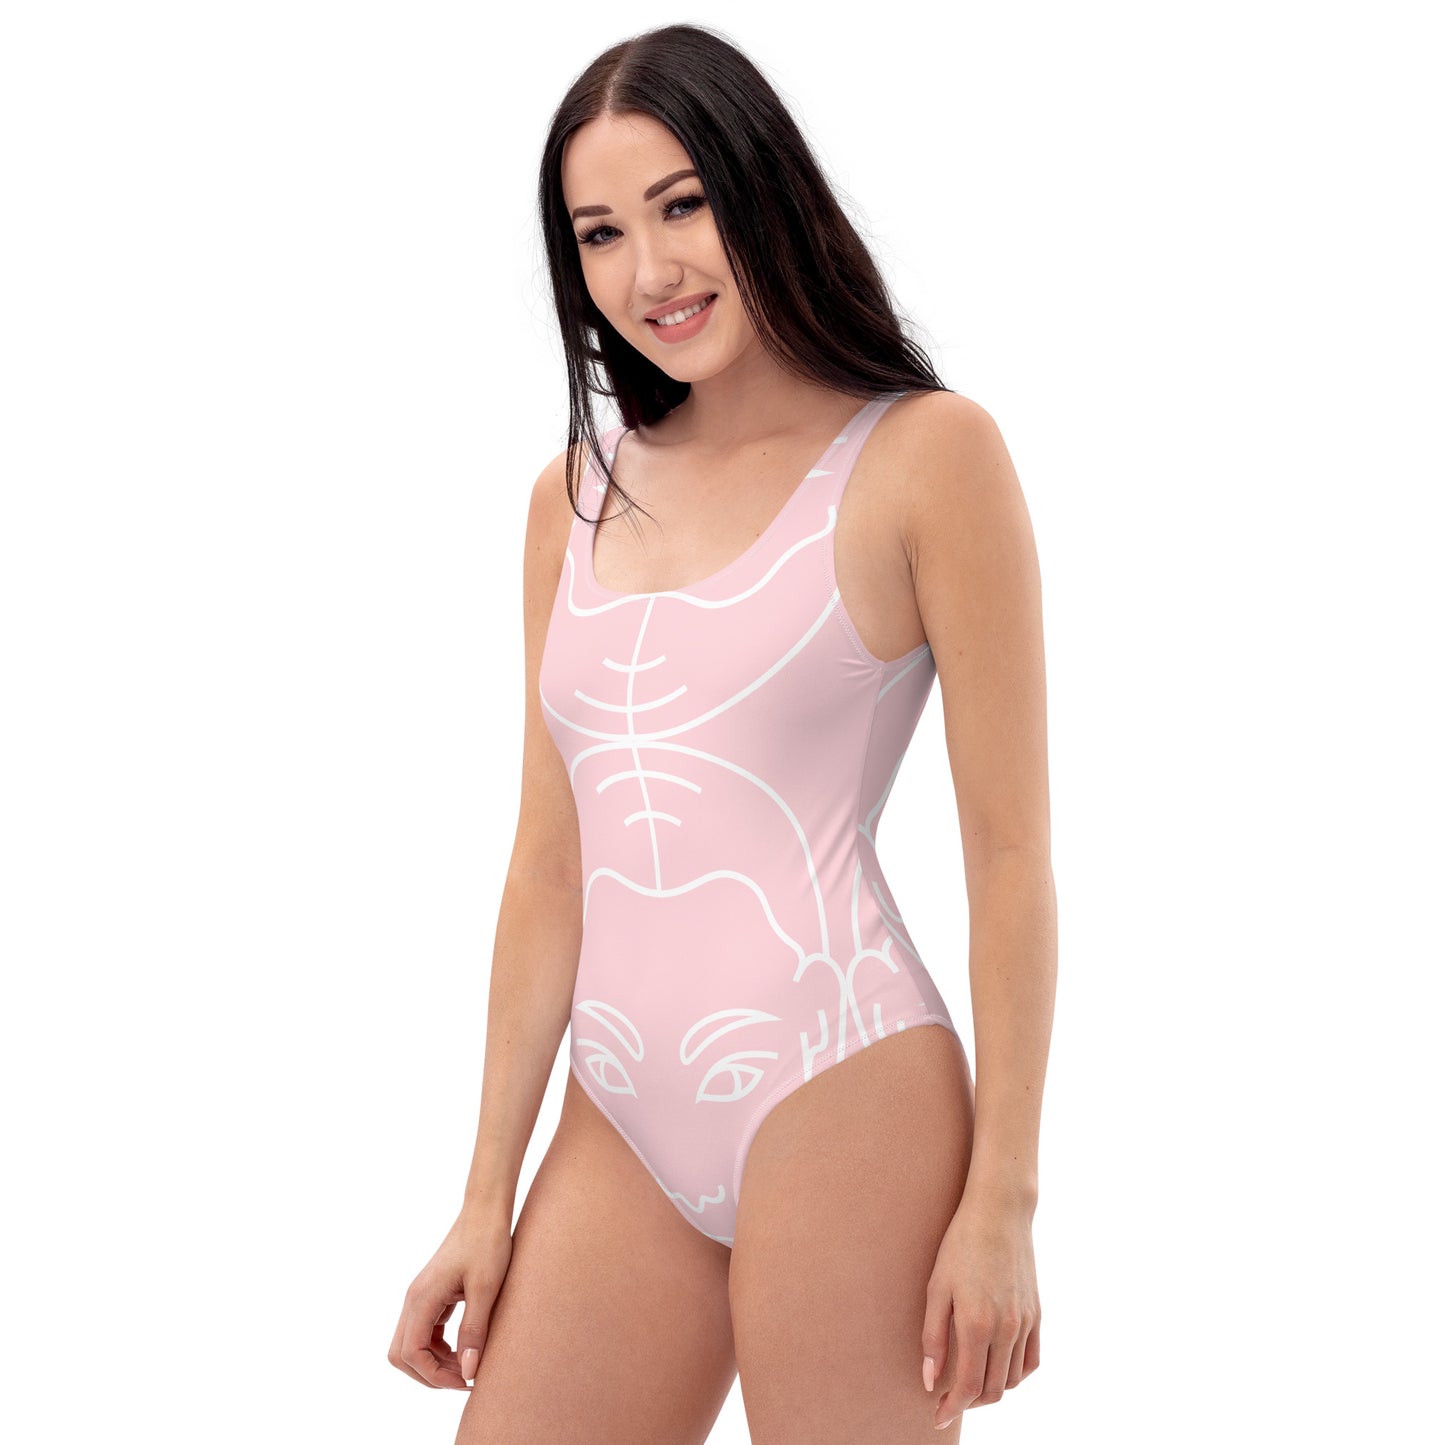 Virgo Pink One-Piece Swimsuit